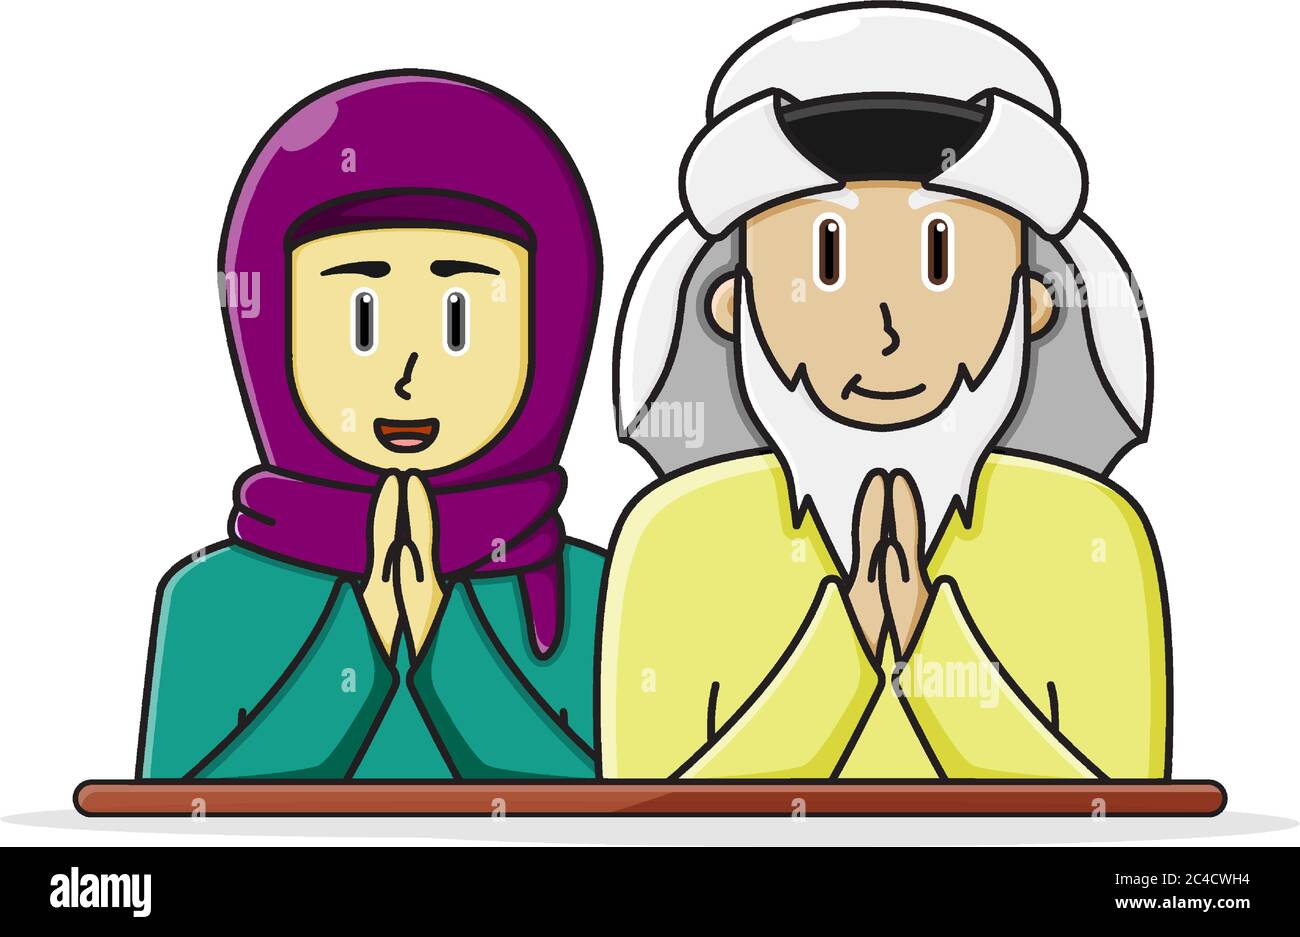 islam arab family illustration character Stock Vector